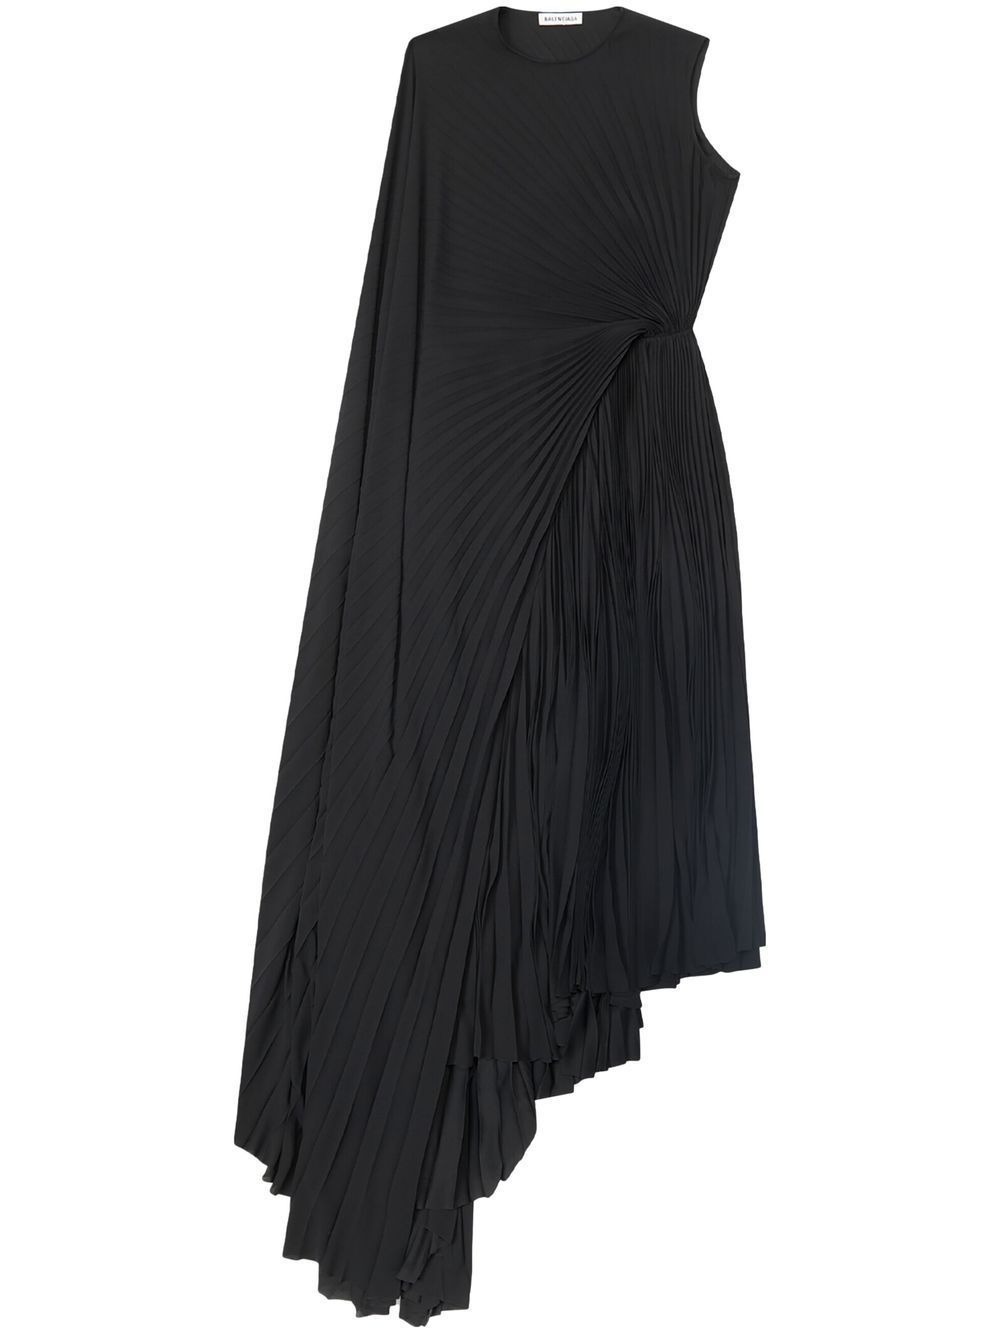 Balenciaga high-low hem pleated dress - Black